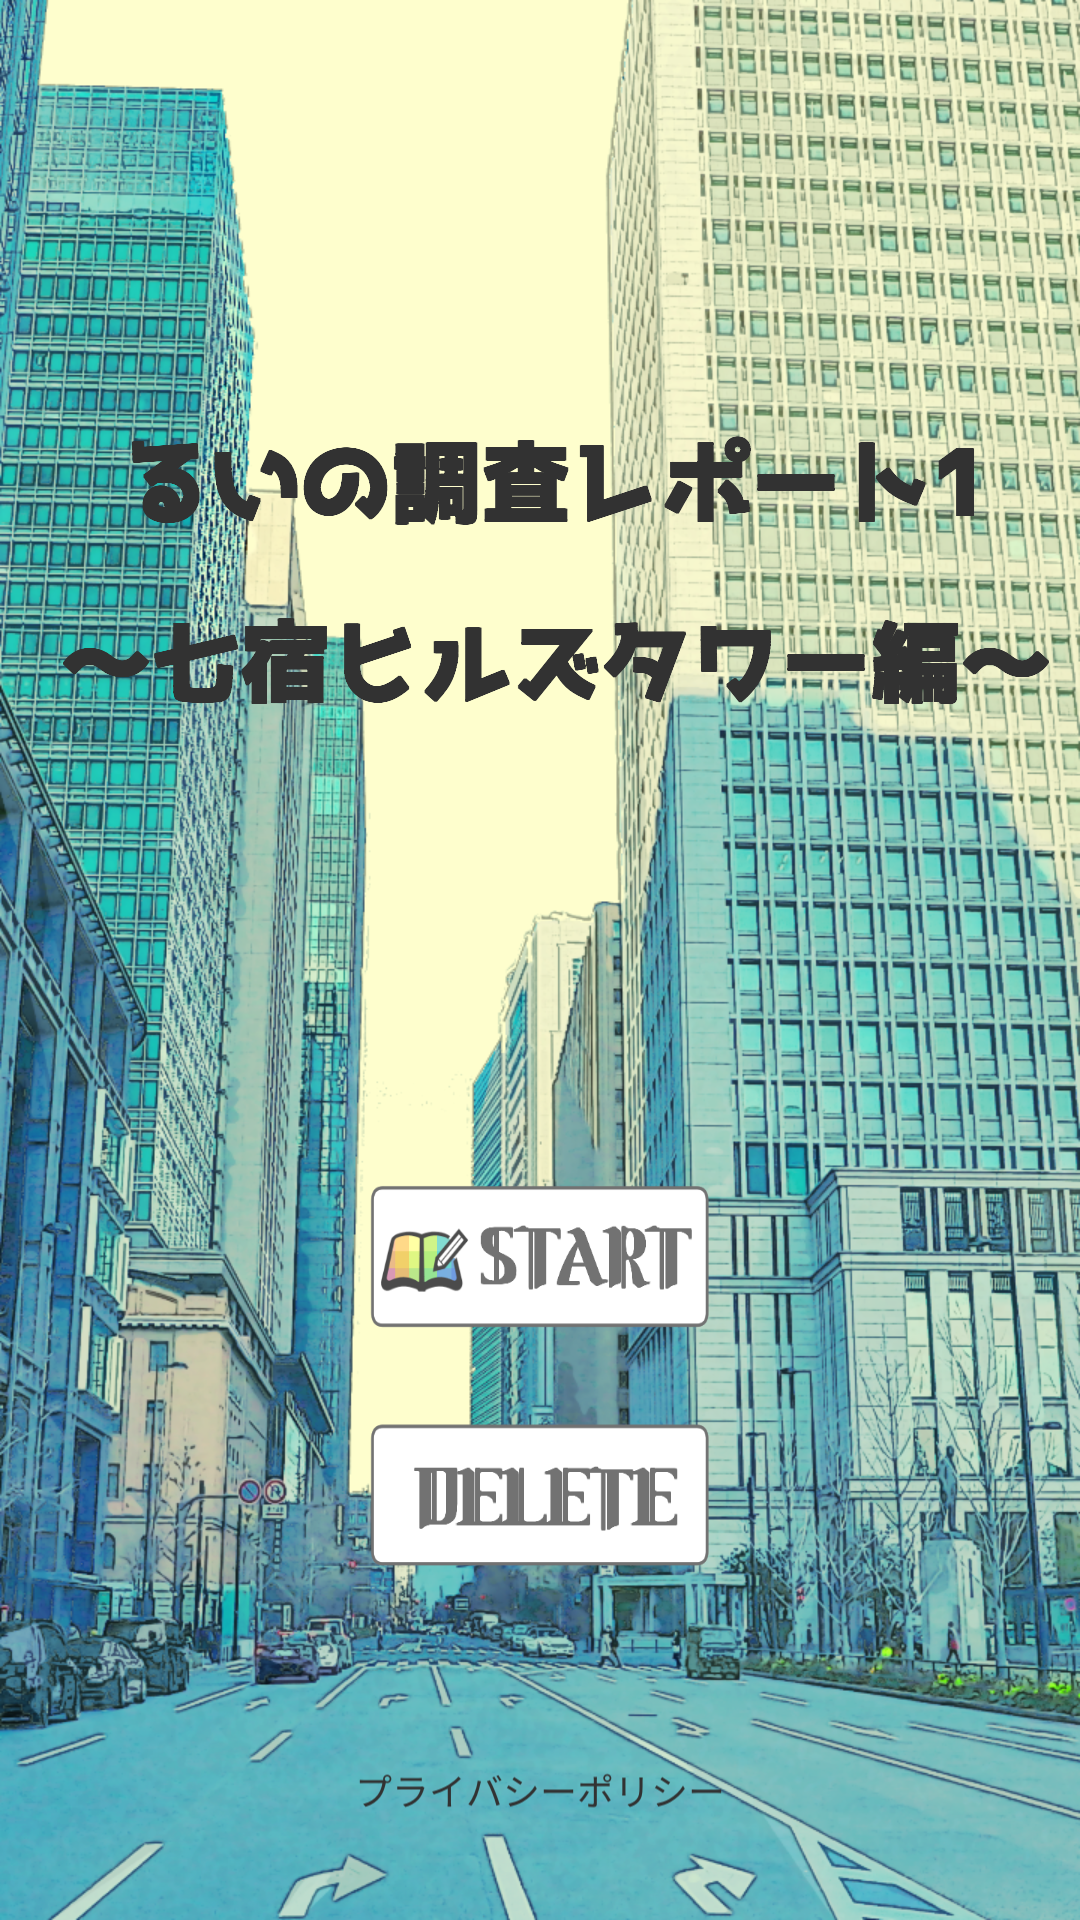 Screenshot 1 of Escape Game Ruis Forschungsbericht 1 ~Nanajuku Hills Tower Edition~ 0.1